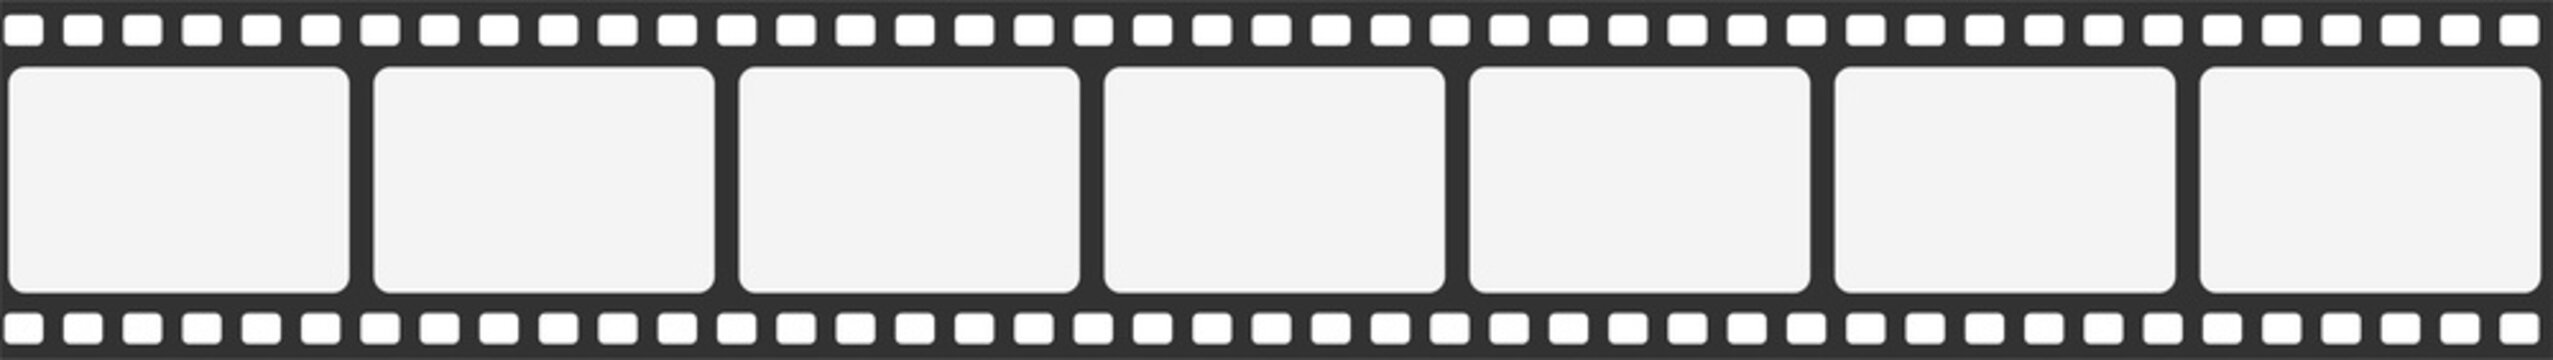 Film strip frame or border. Photo, cinema or movie negative. Illustration